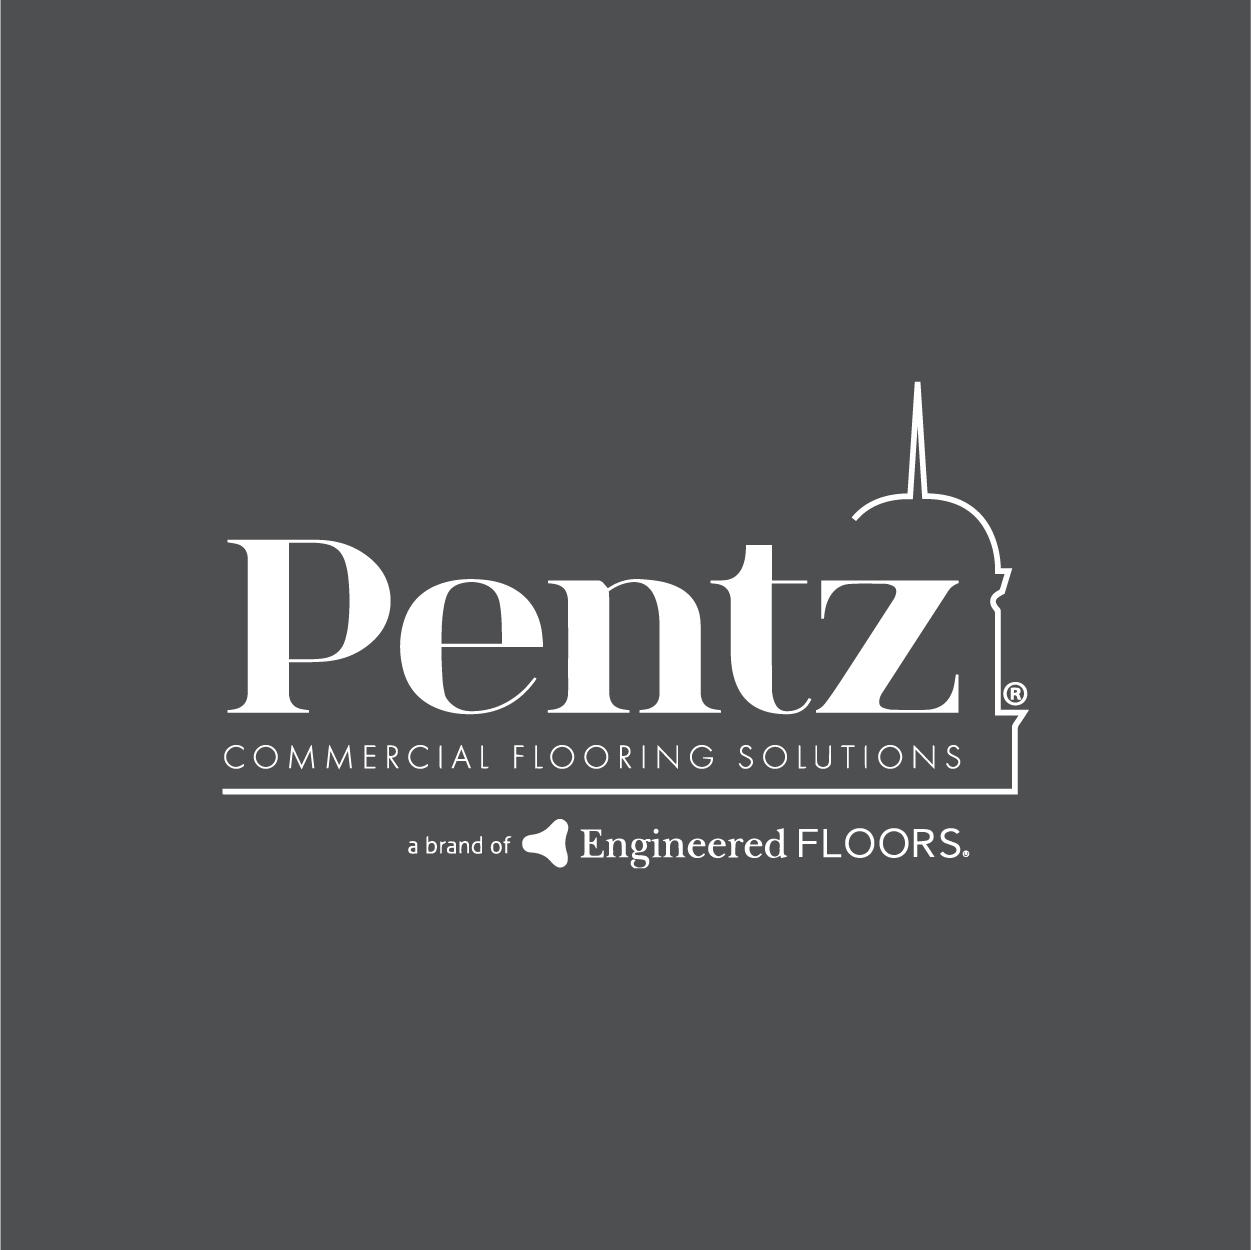 Pentz Commercial Flooring Solutions